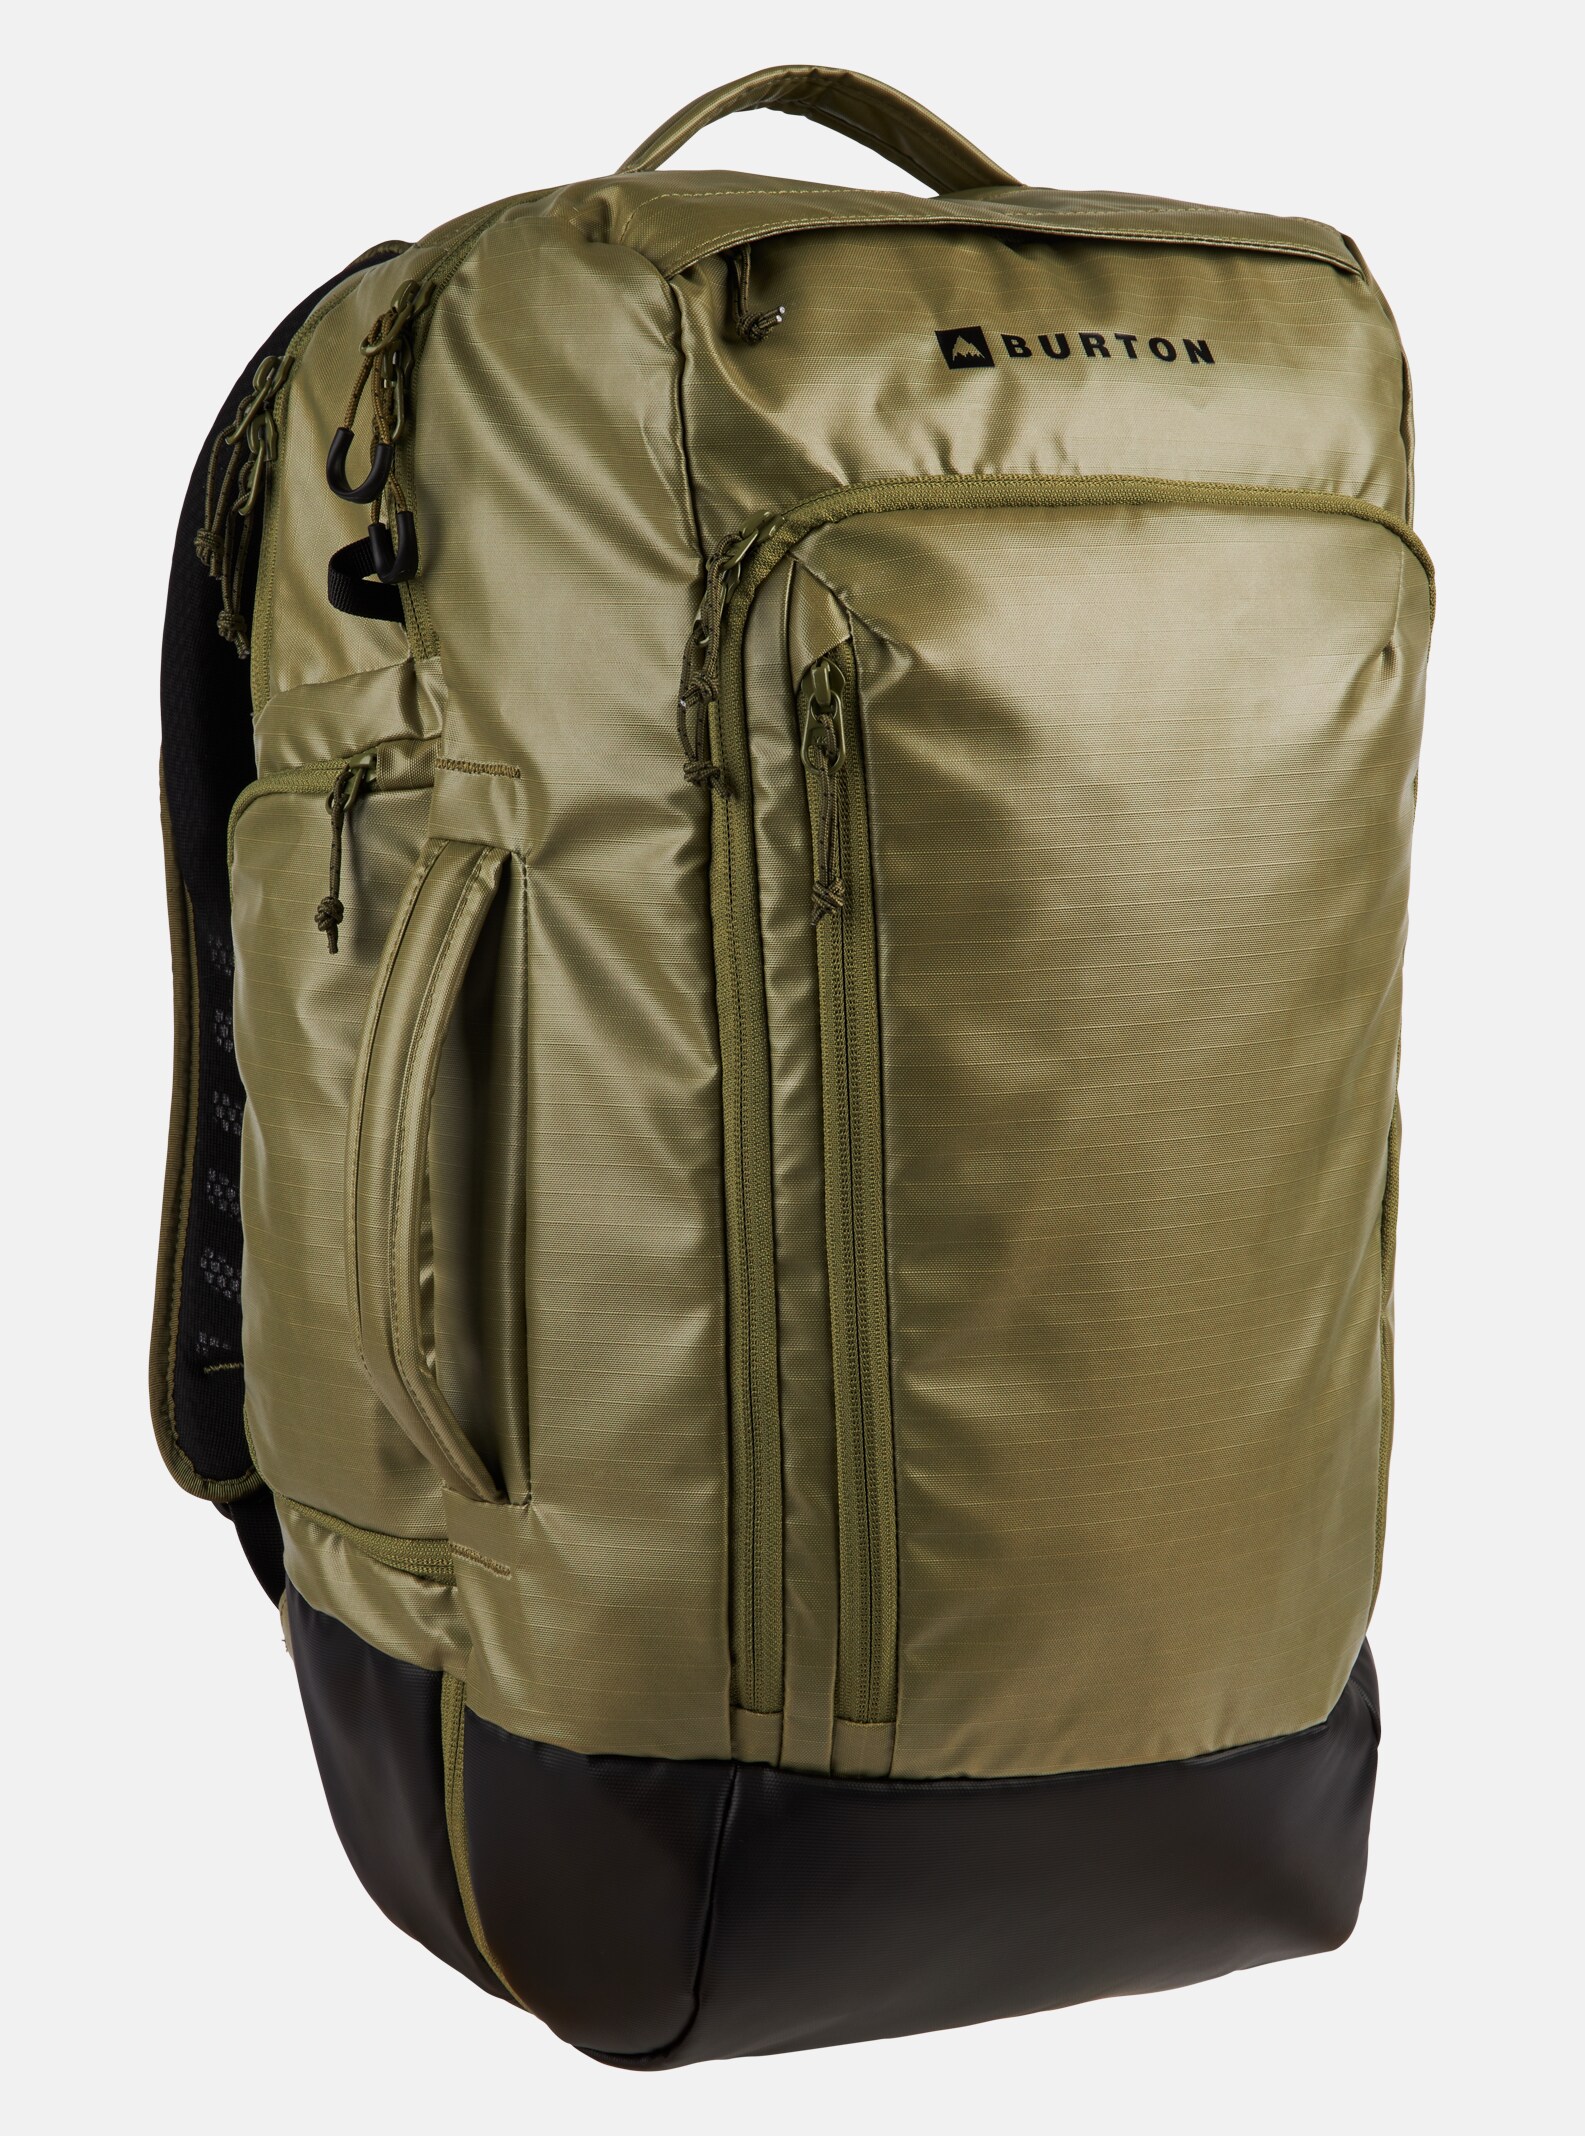 Burton Multipath 27L Travel Pack - Best Travel Backpacks